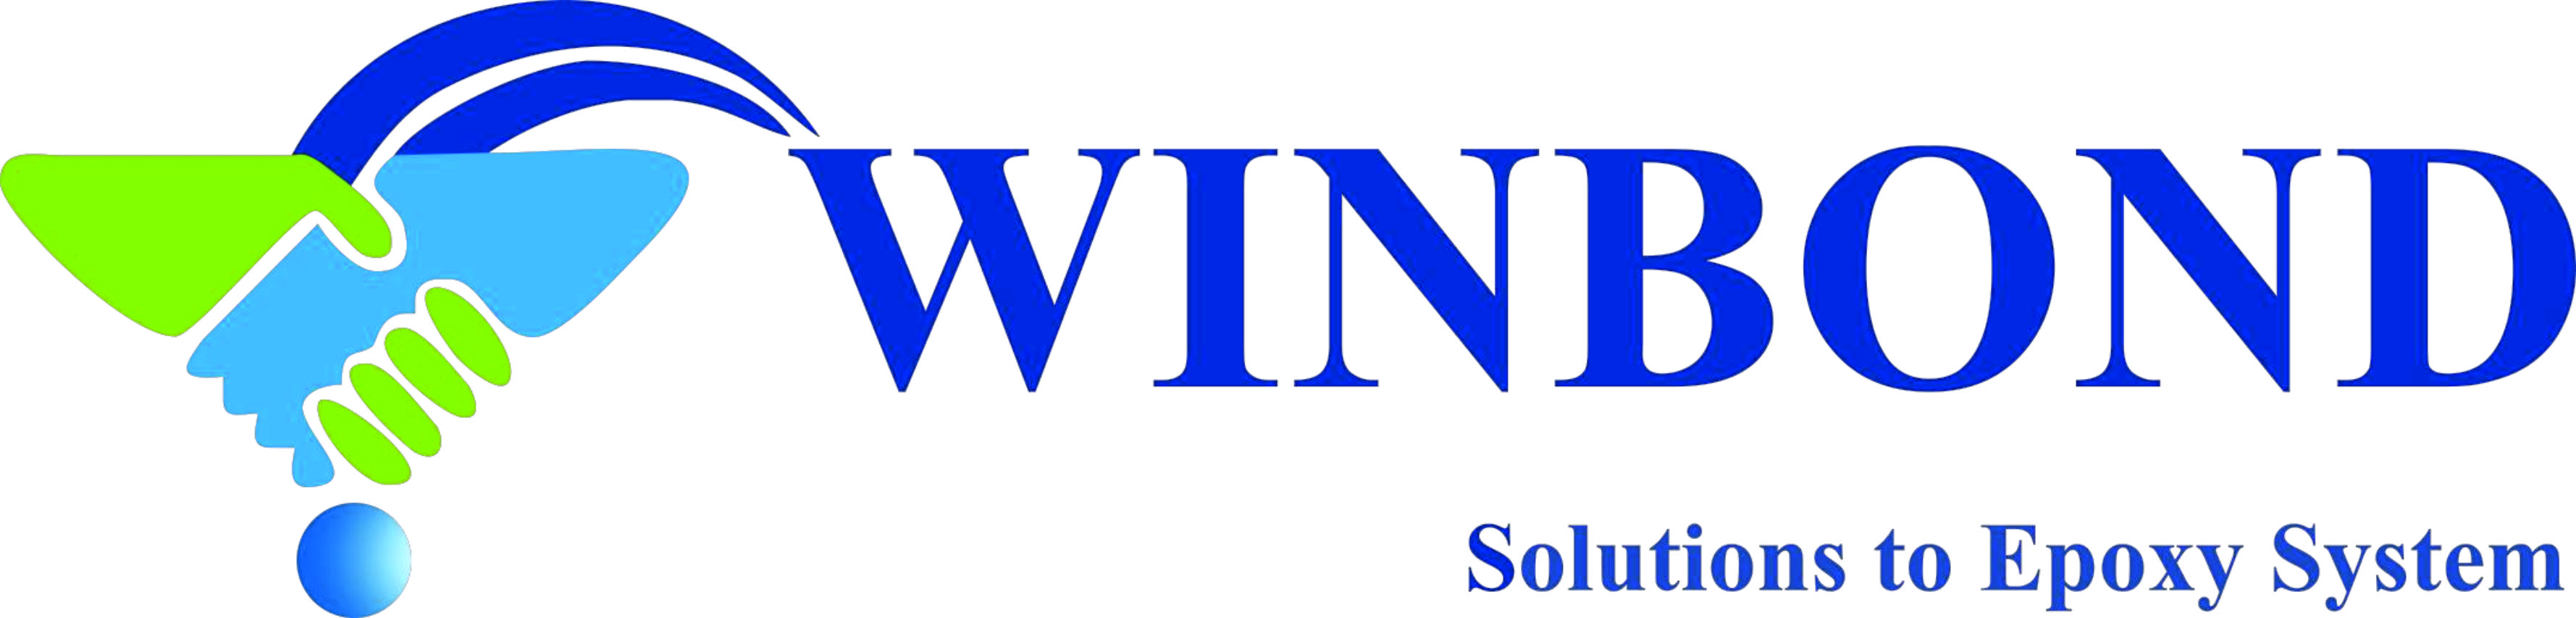 Winbond Materials Co., Ltd._logo